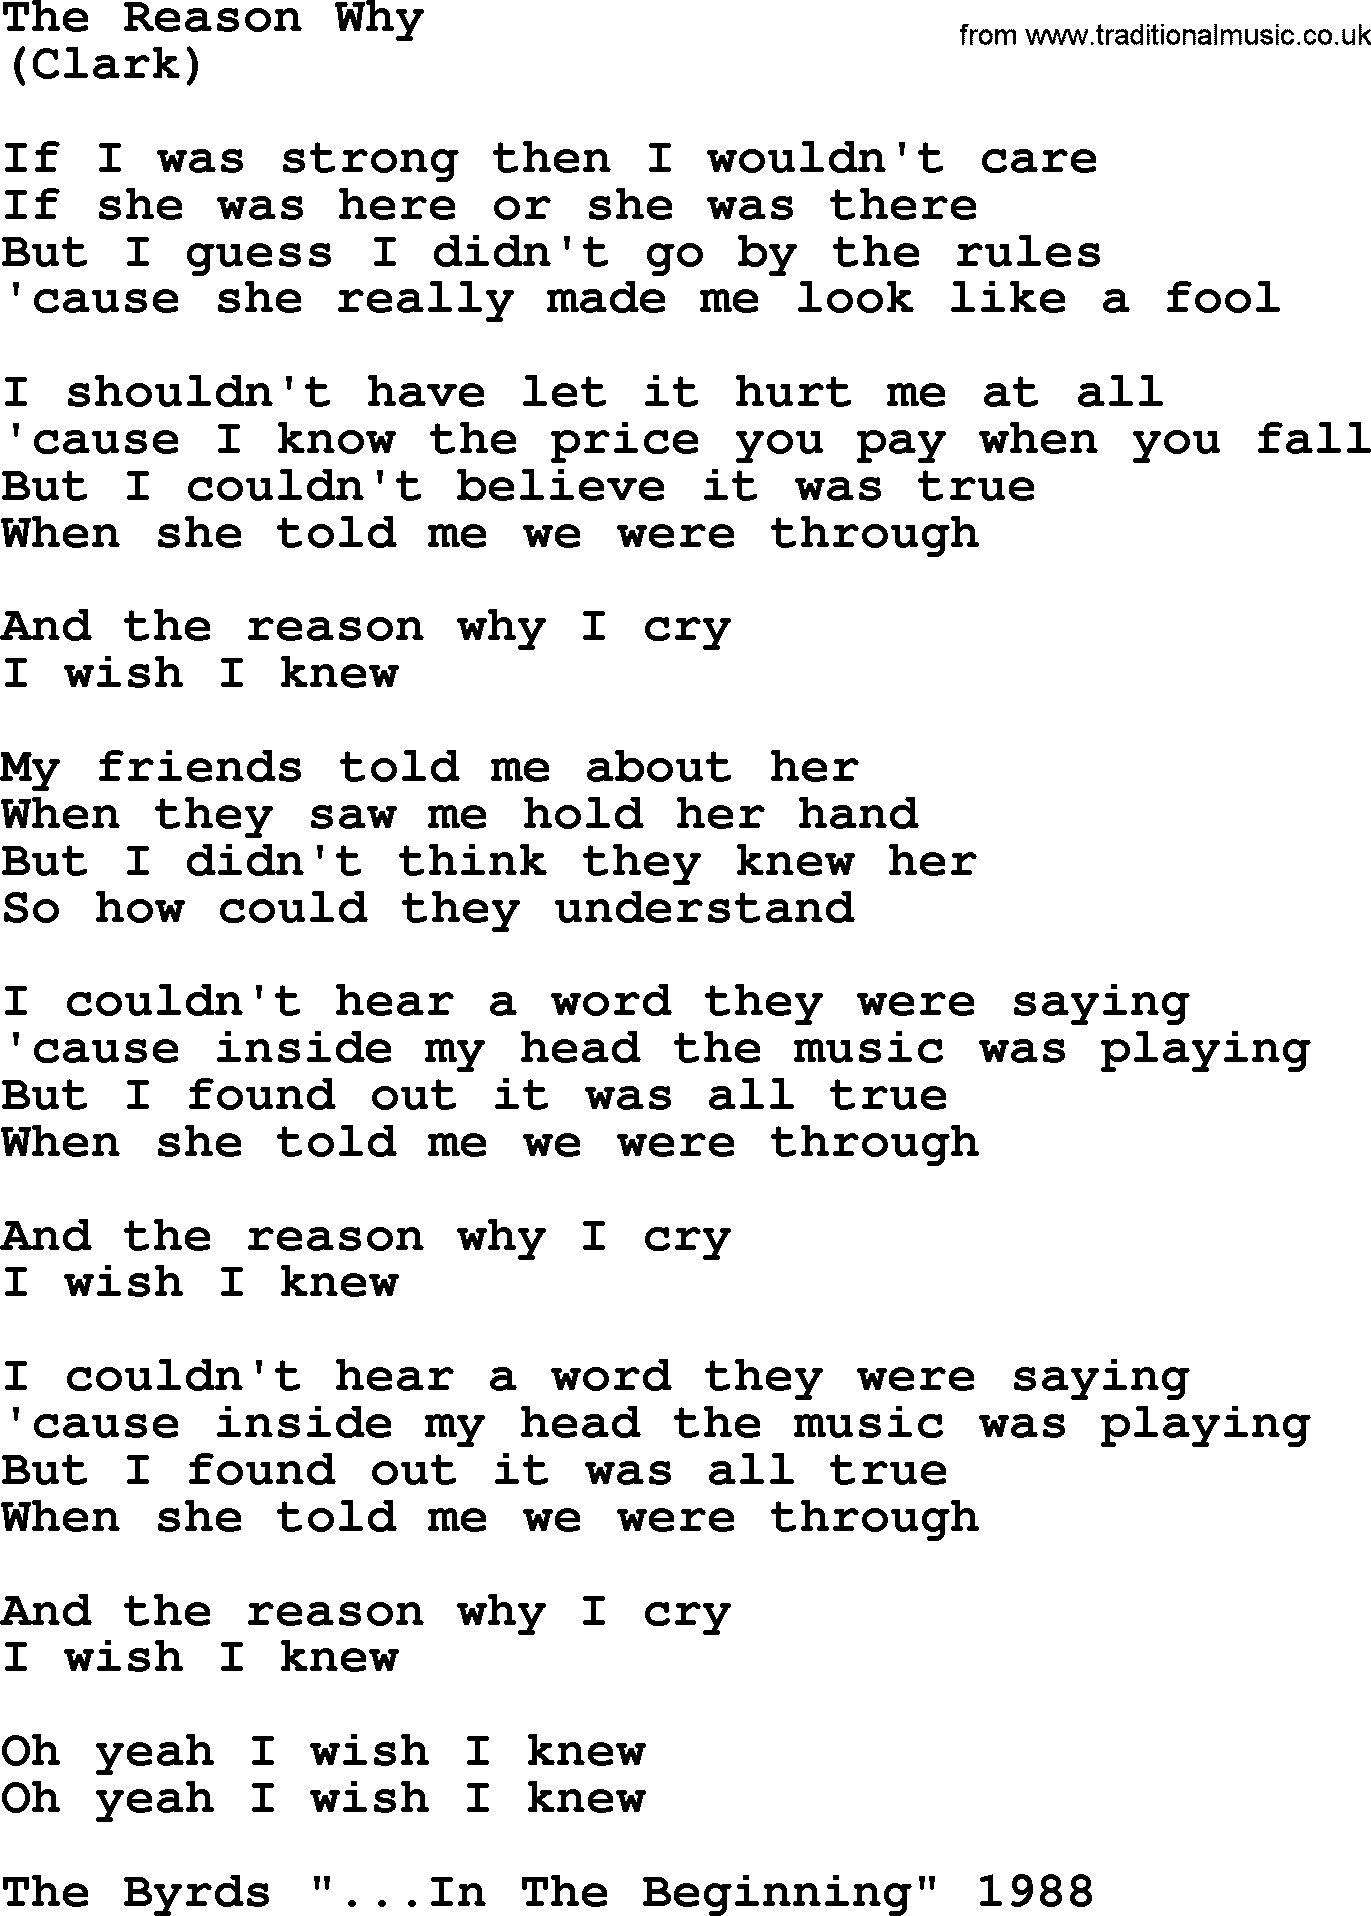 The Byrds song The Reason Why, lyrics